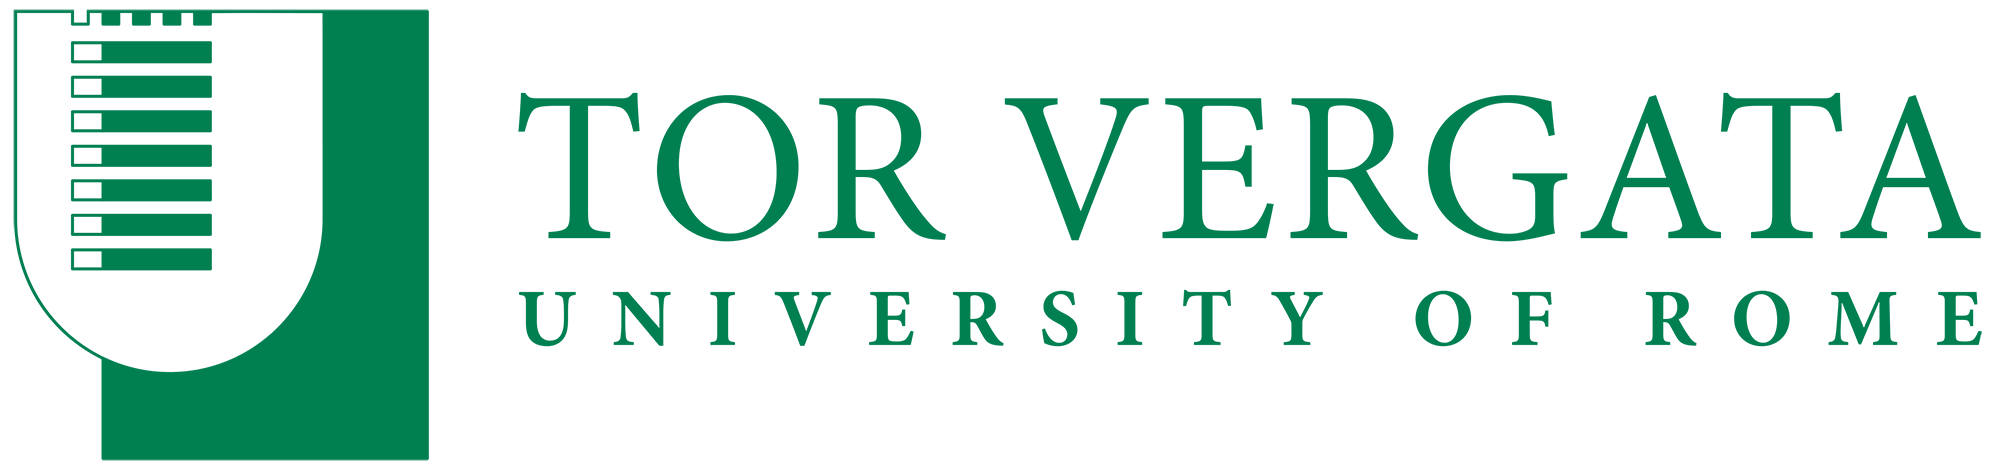 tor-vergata-university-of-rome-logo.png